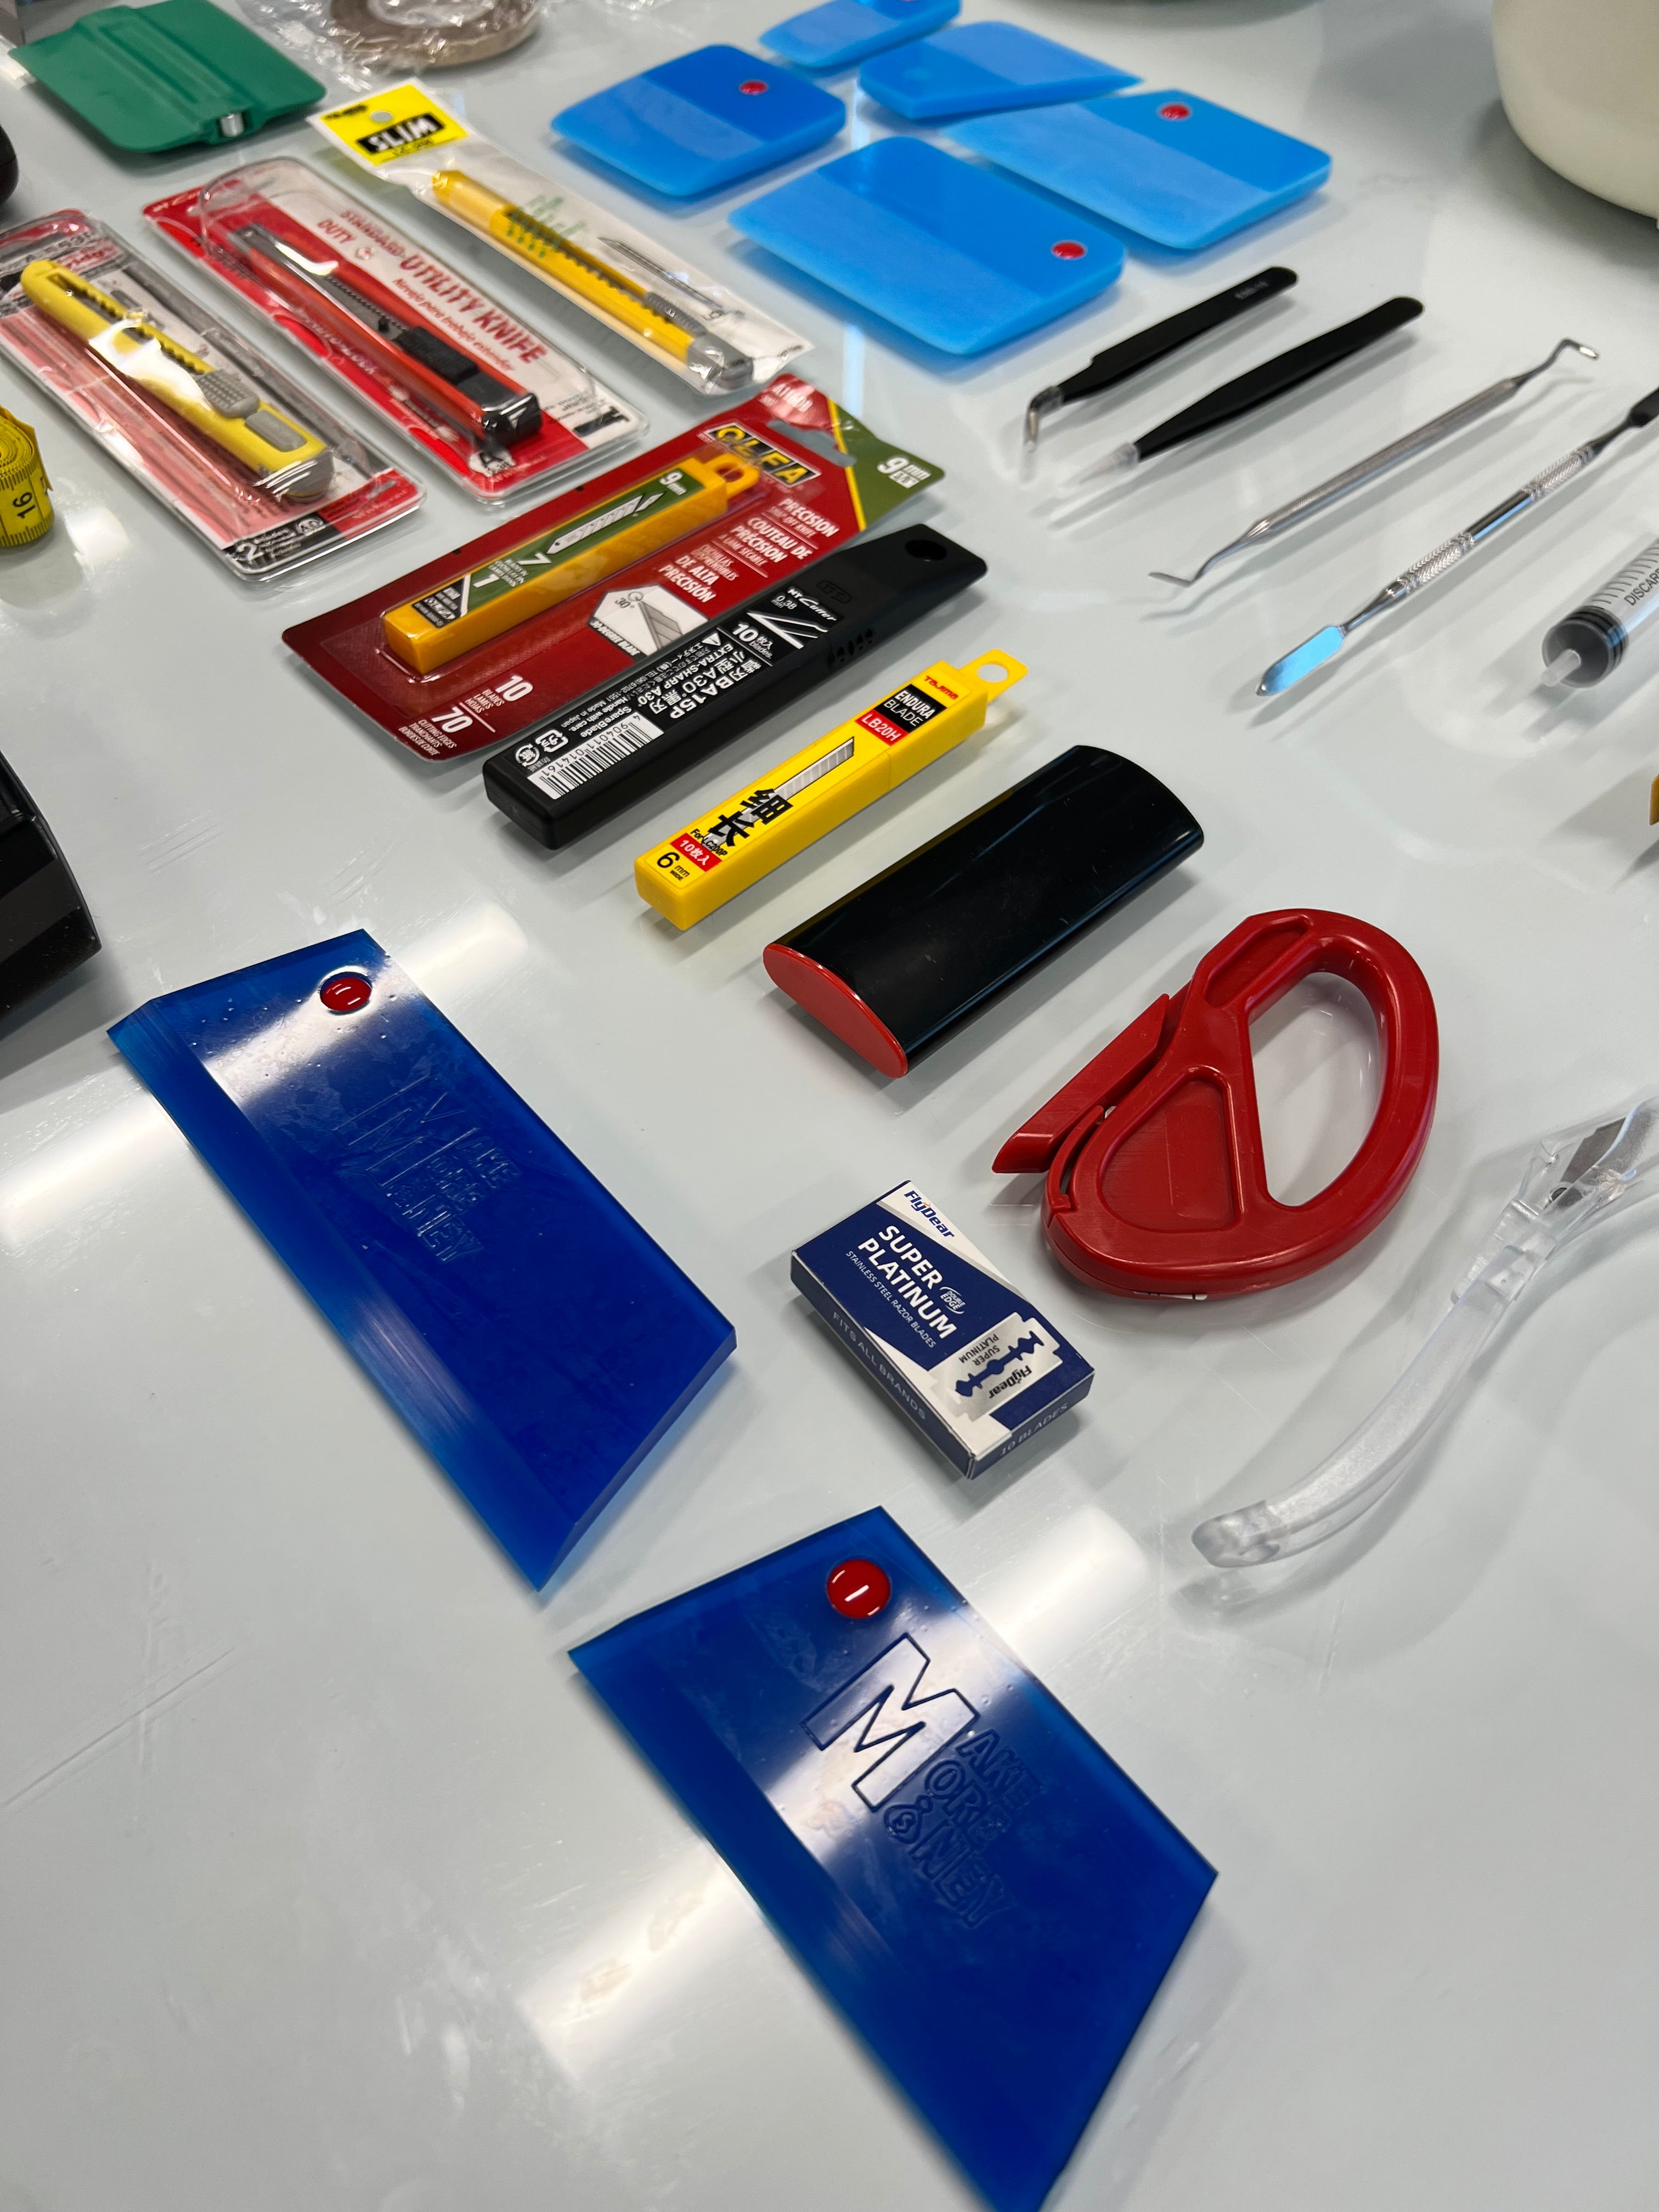 PPF Professional kit (PPF Tools)